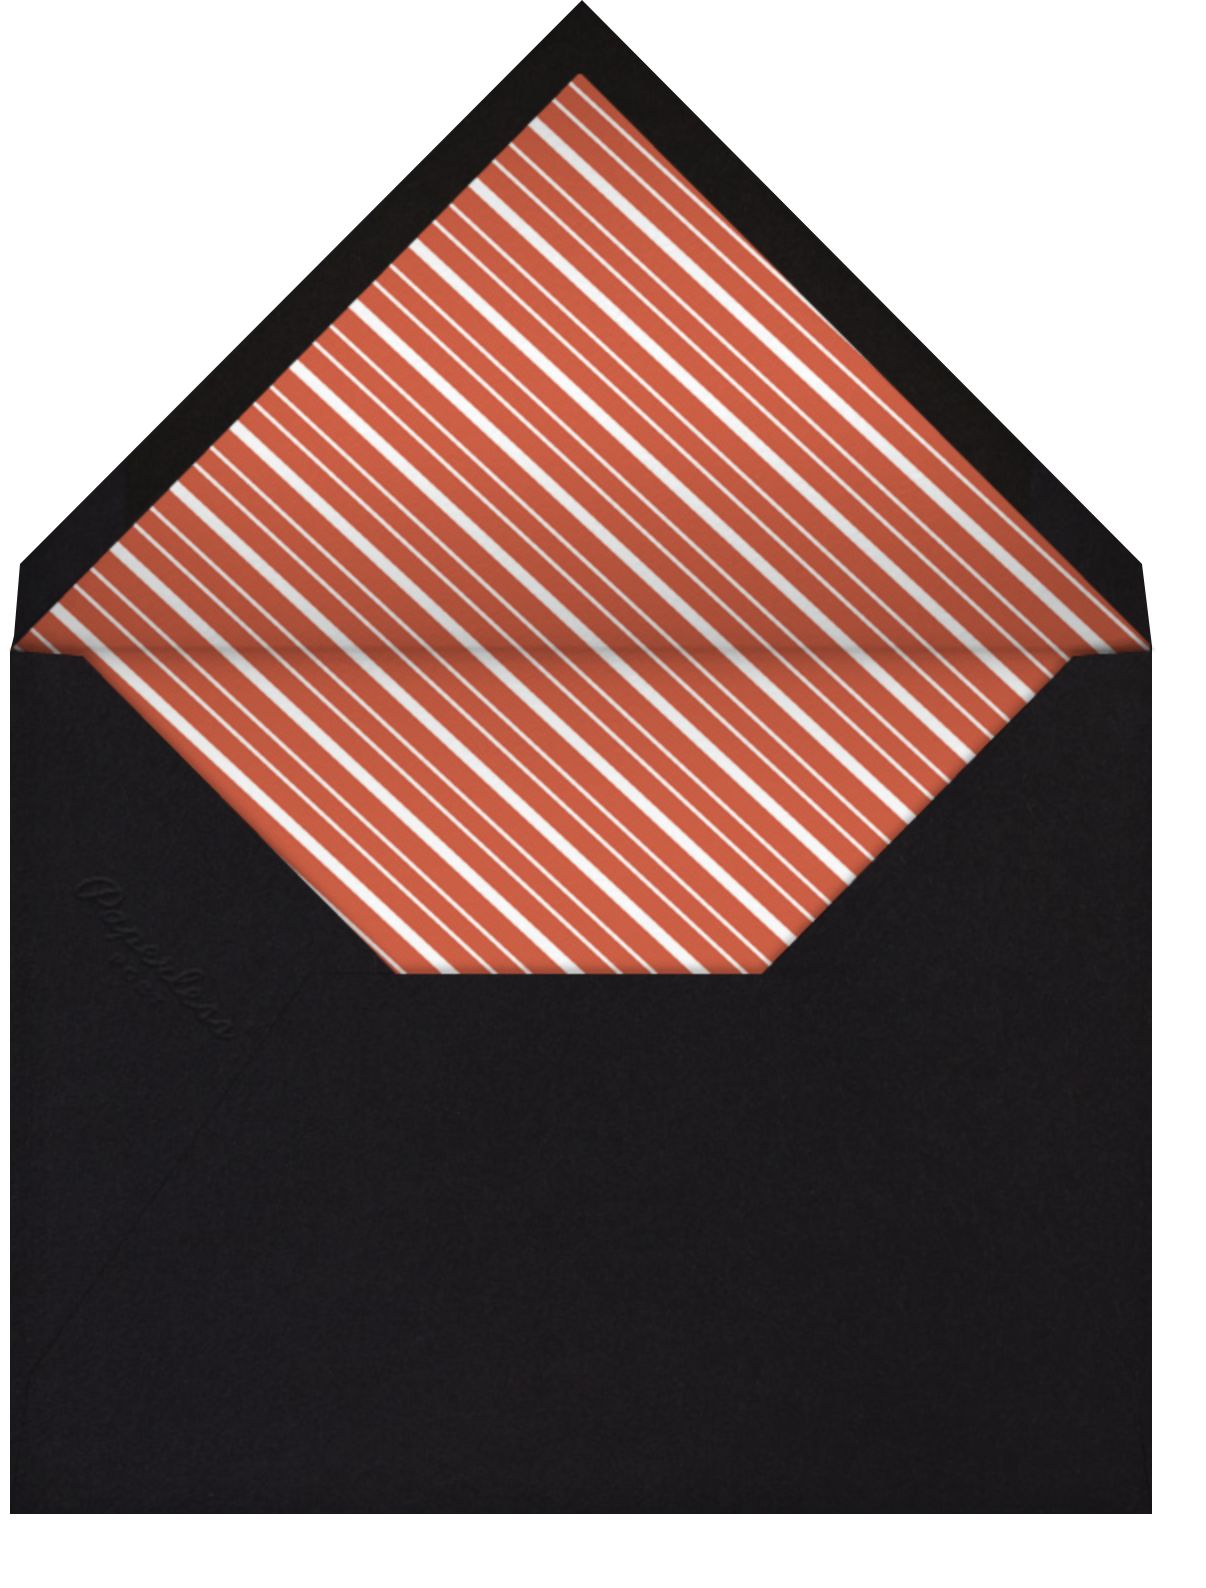 Medal - Blood Orange - Paperless Post - Envelope